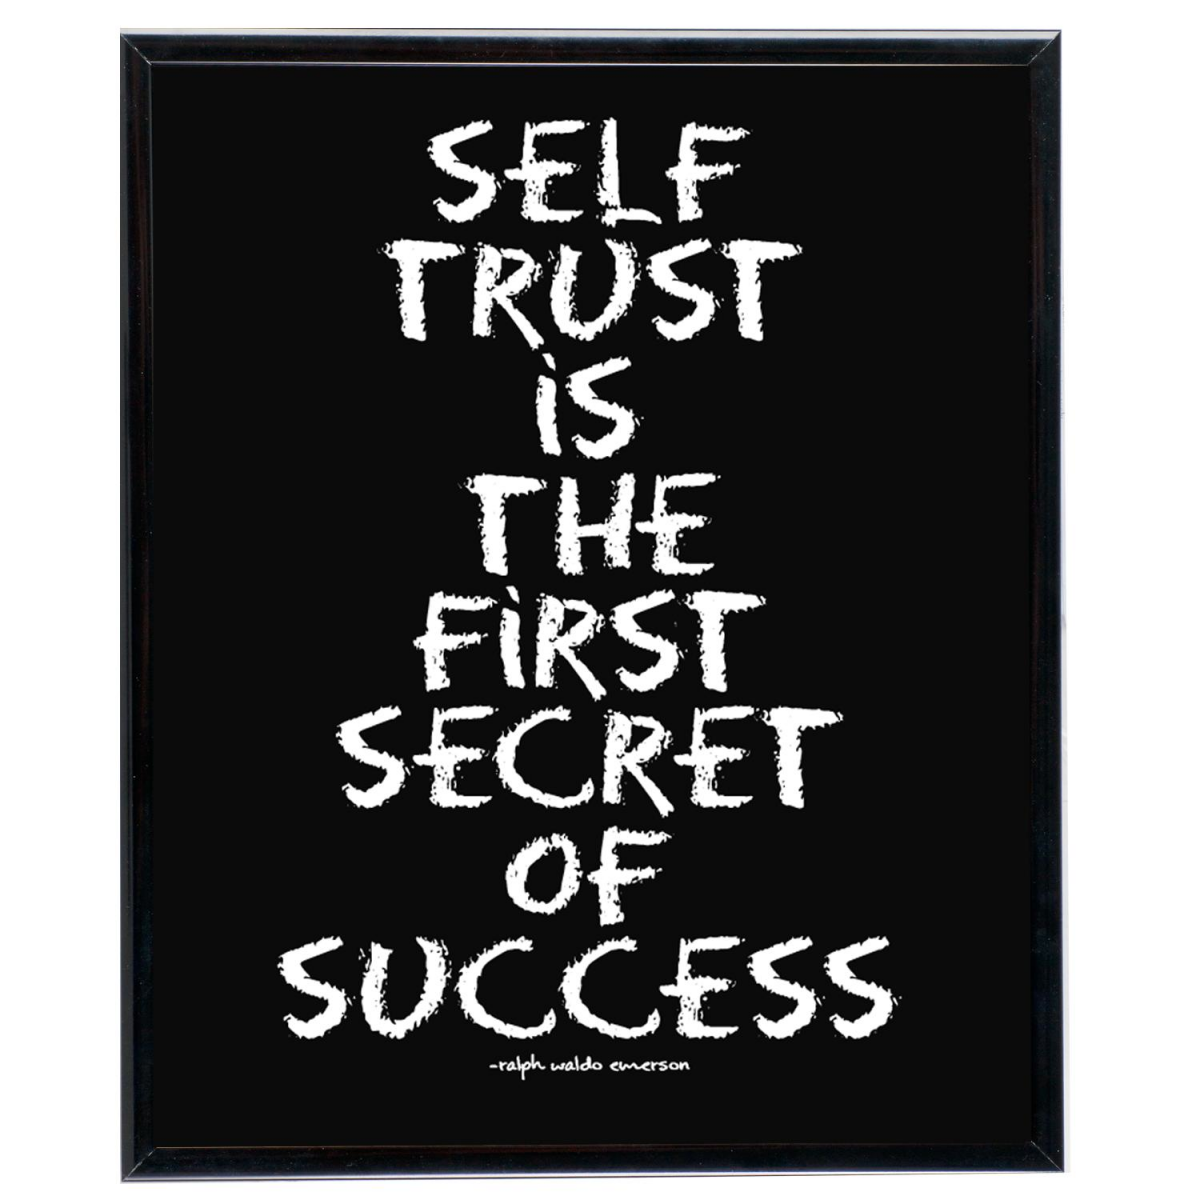 self-trust